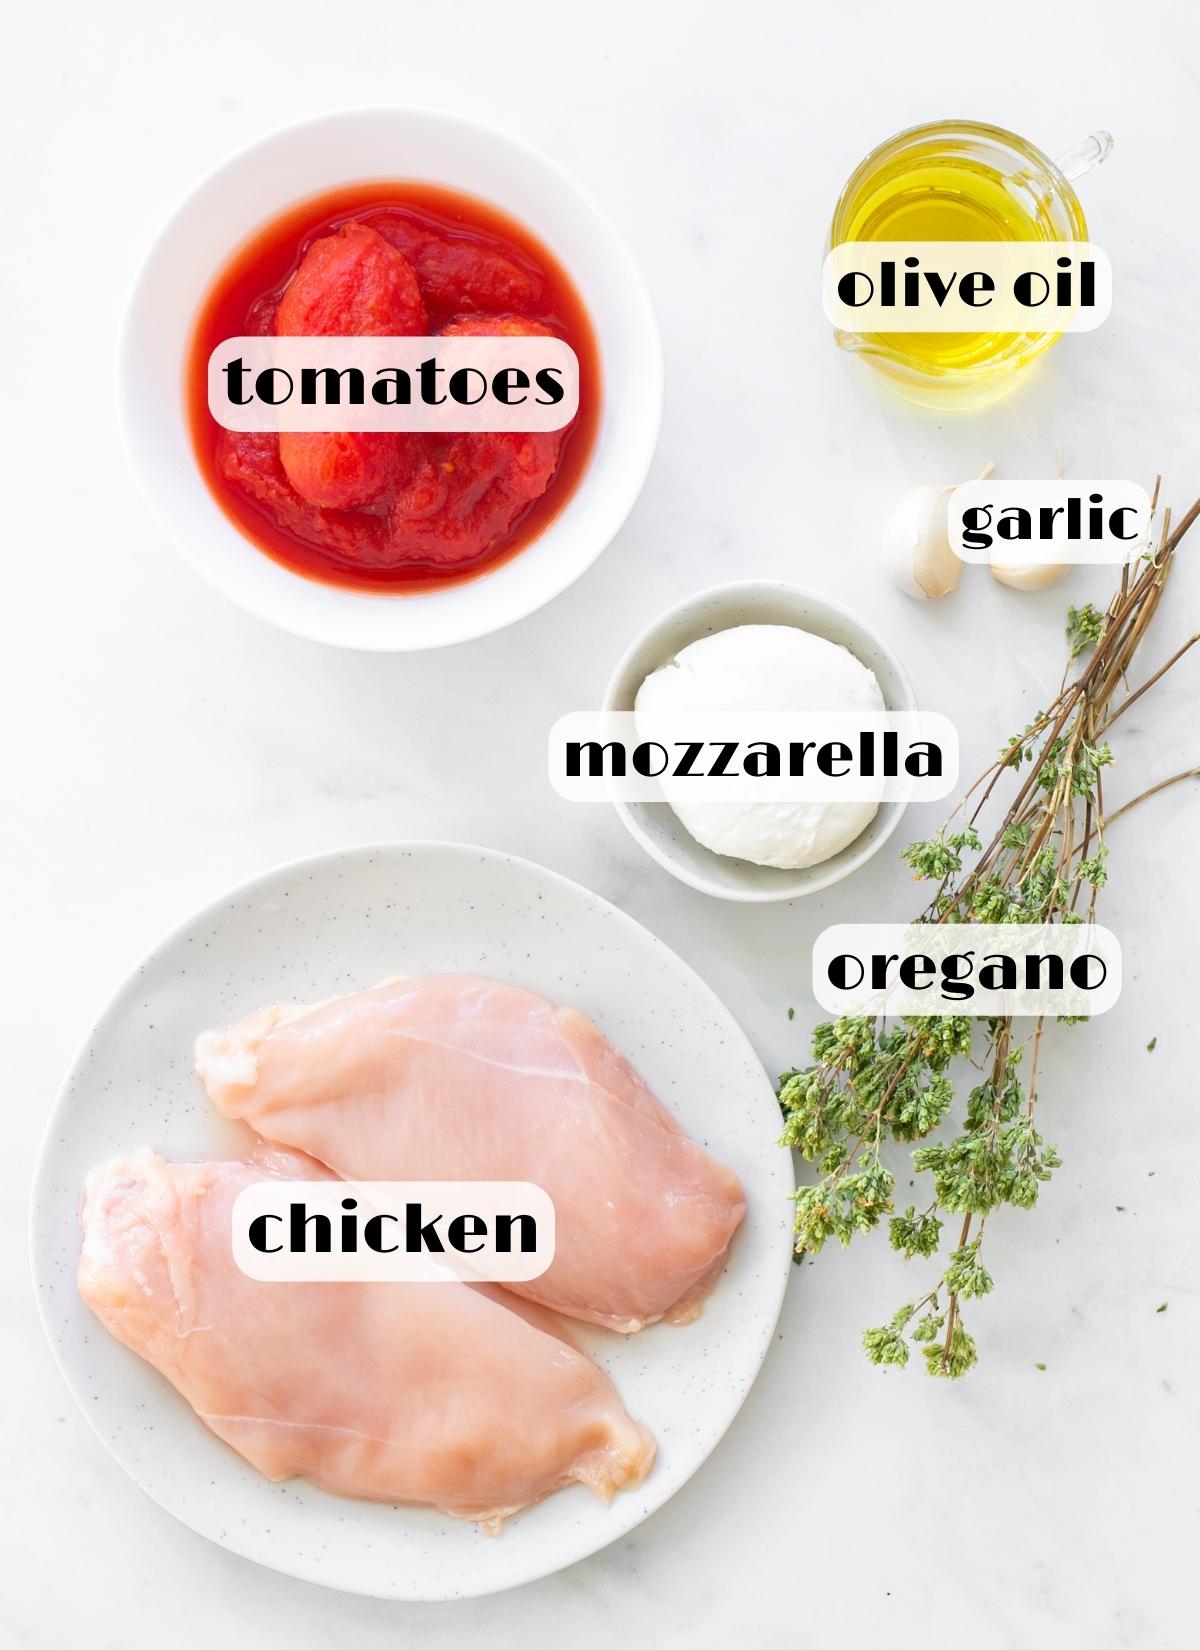 Ingredients for pizzaiola chicken: chicken breast, tomatoes, oregano, mozzarella, olive oil, garlic.